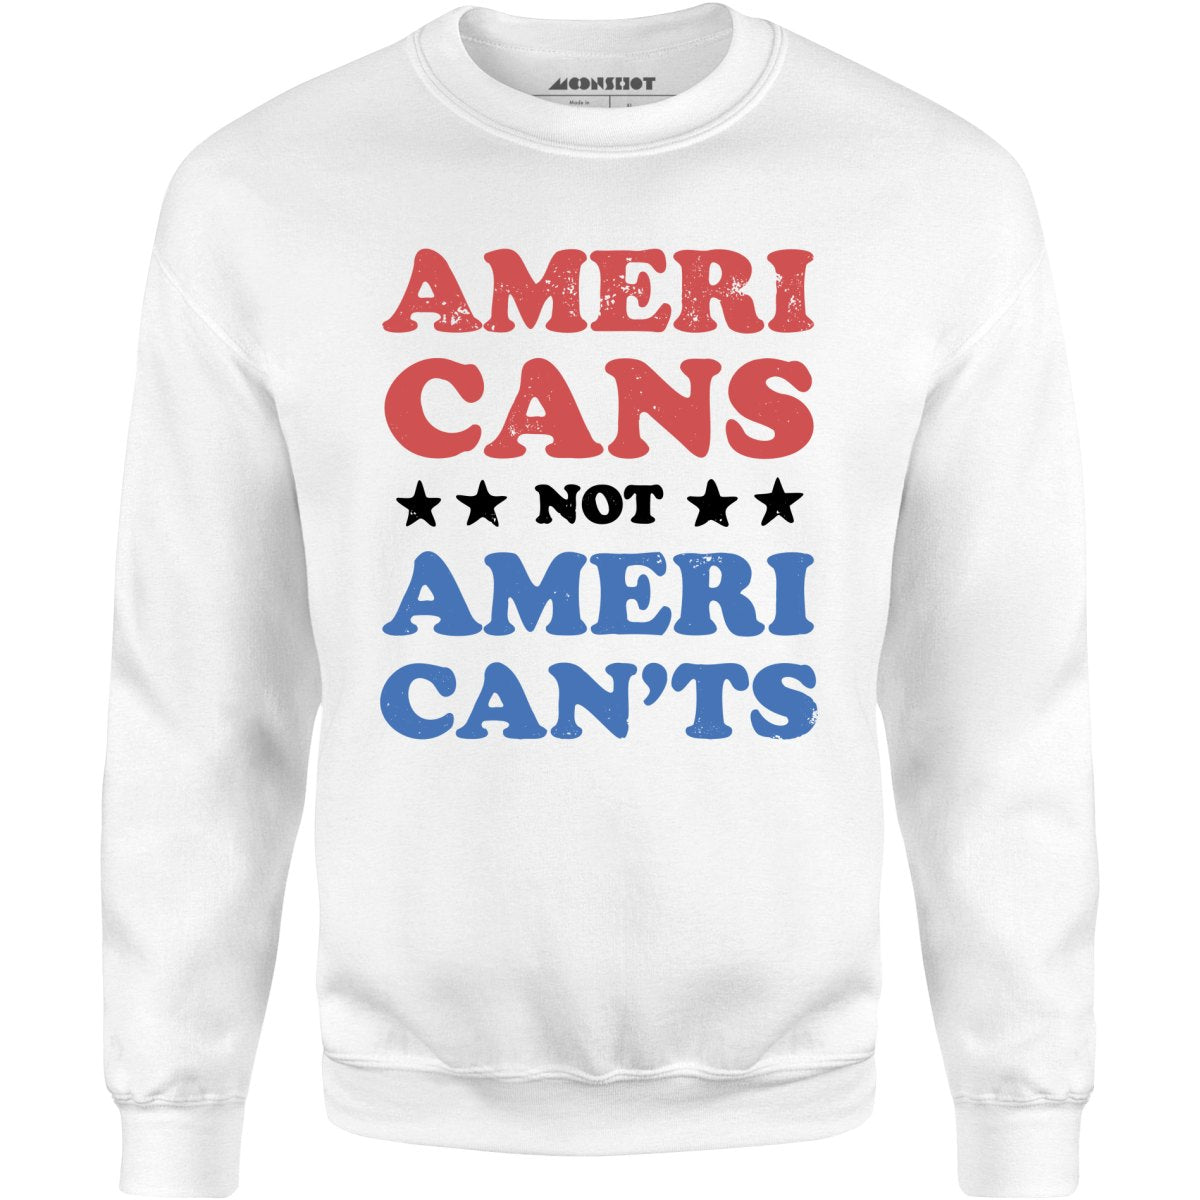 Americans Not American'ts - Unisex Sweatshirt